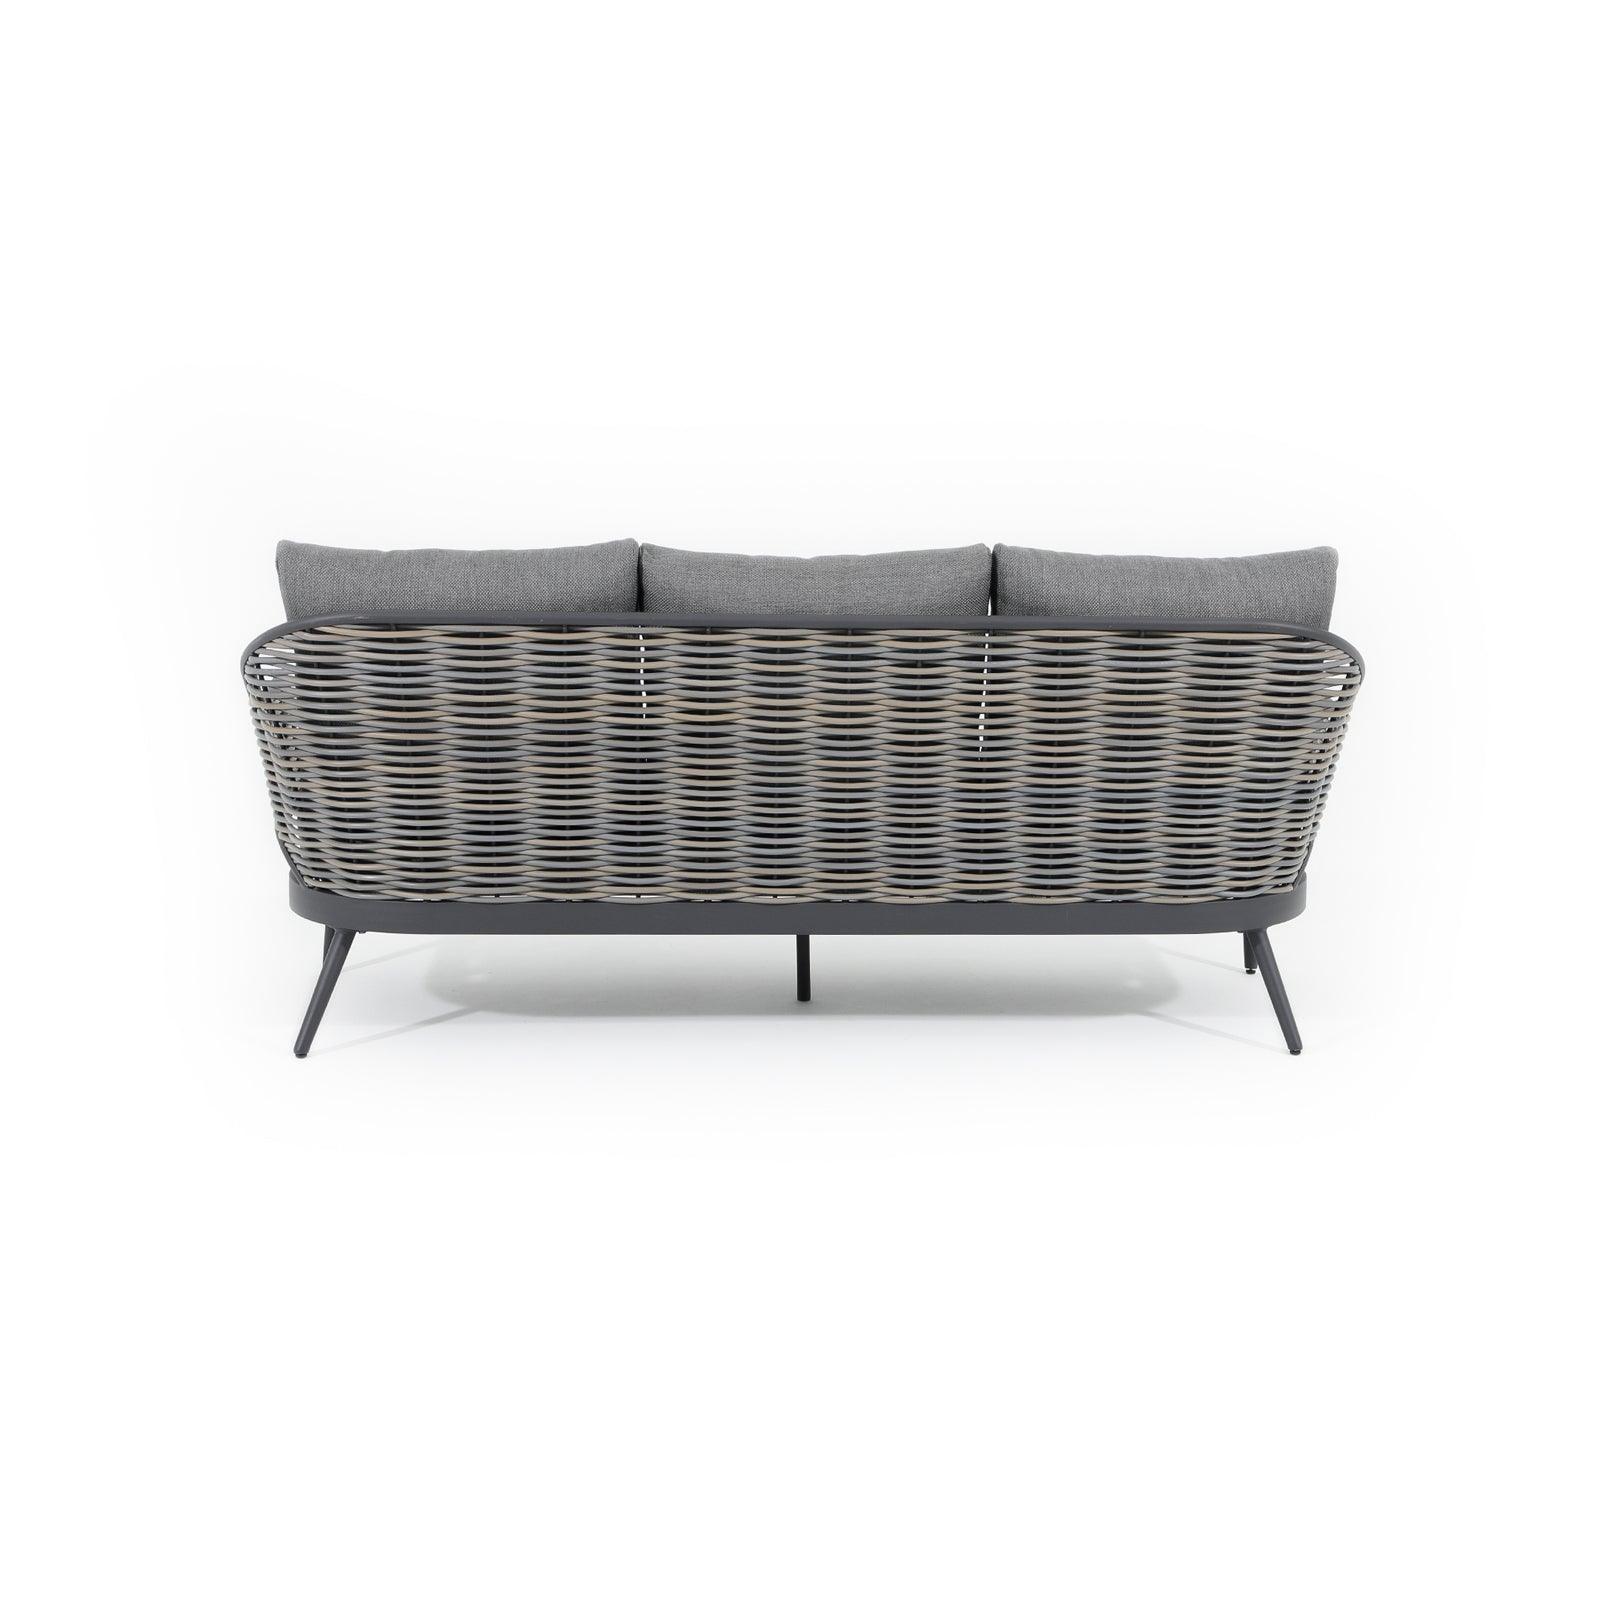 Burano Grey wicker outdoor Sofa with aluminum frame, grey cushions, 3 seat, back - Jardina Furniture